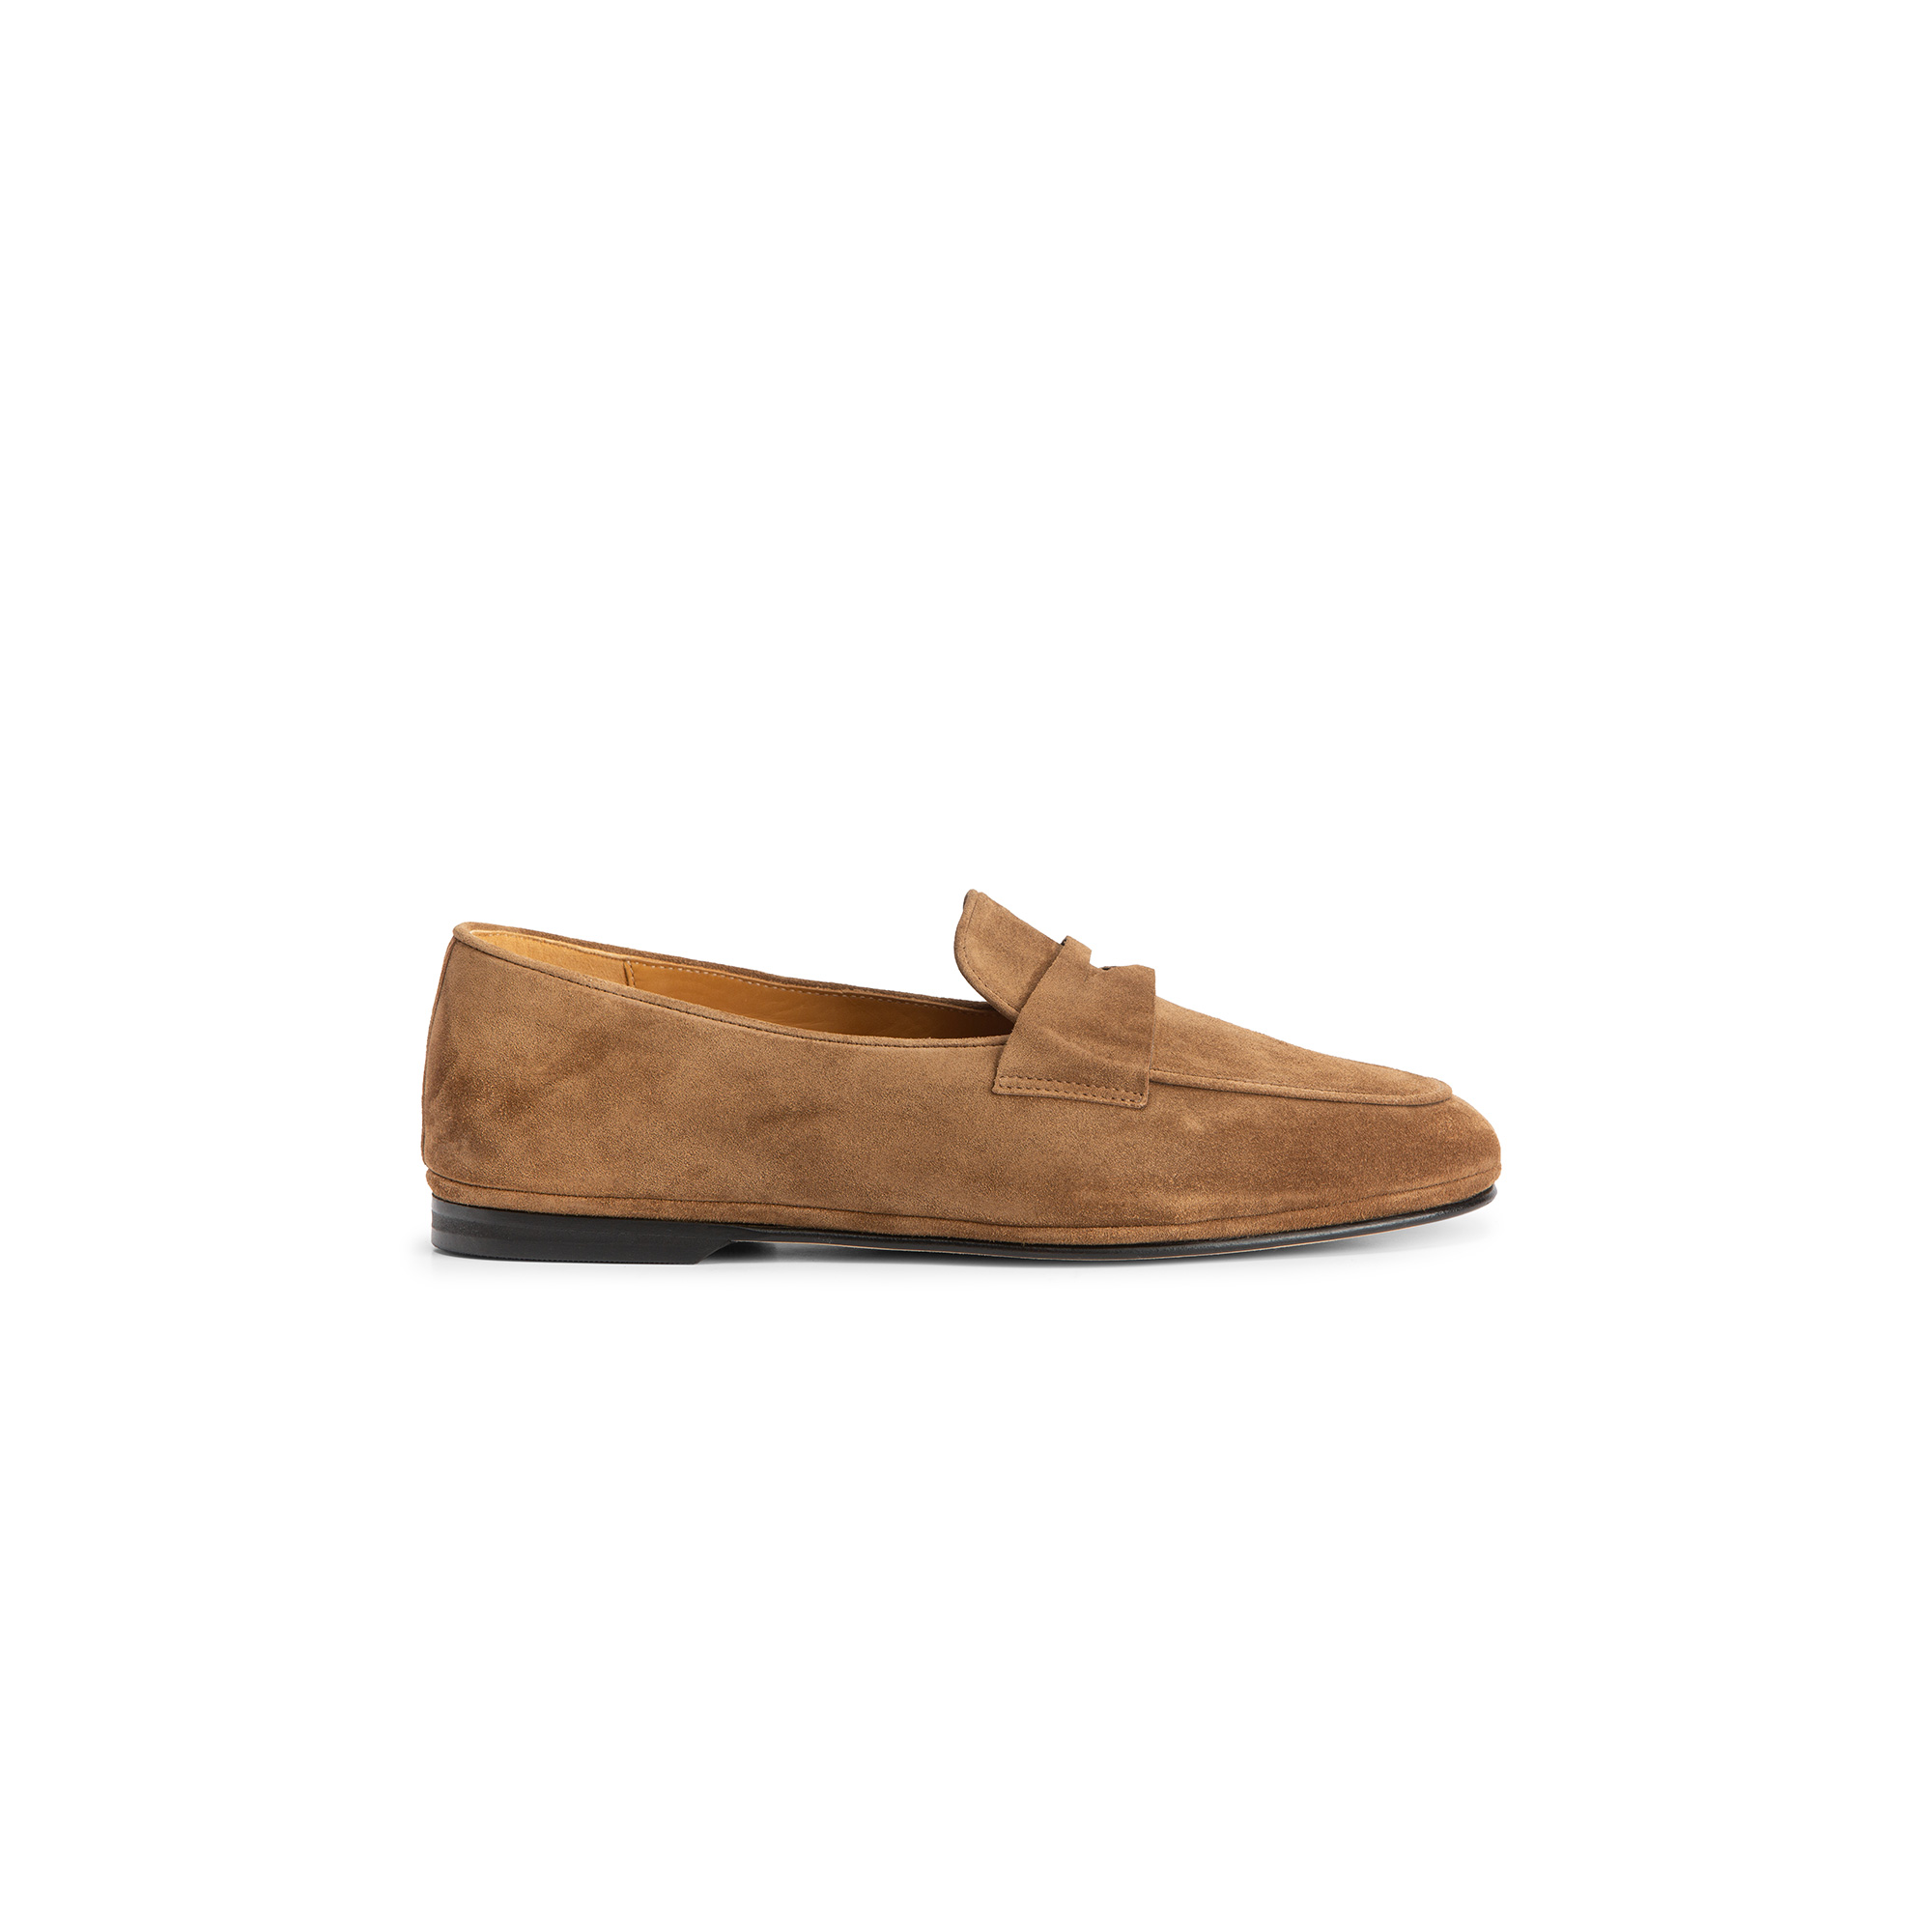 Pantofola esterno chiusa velour castoro - Farfalla italian slippers